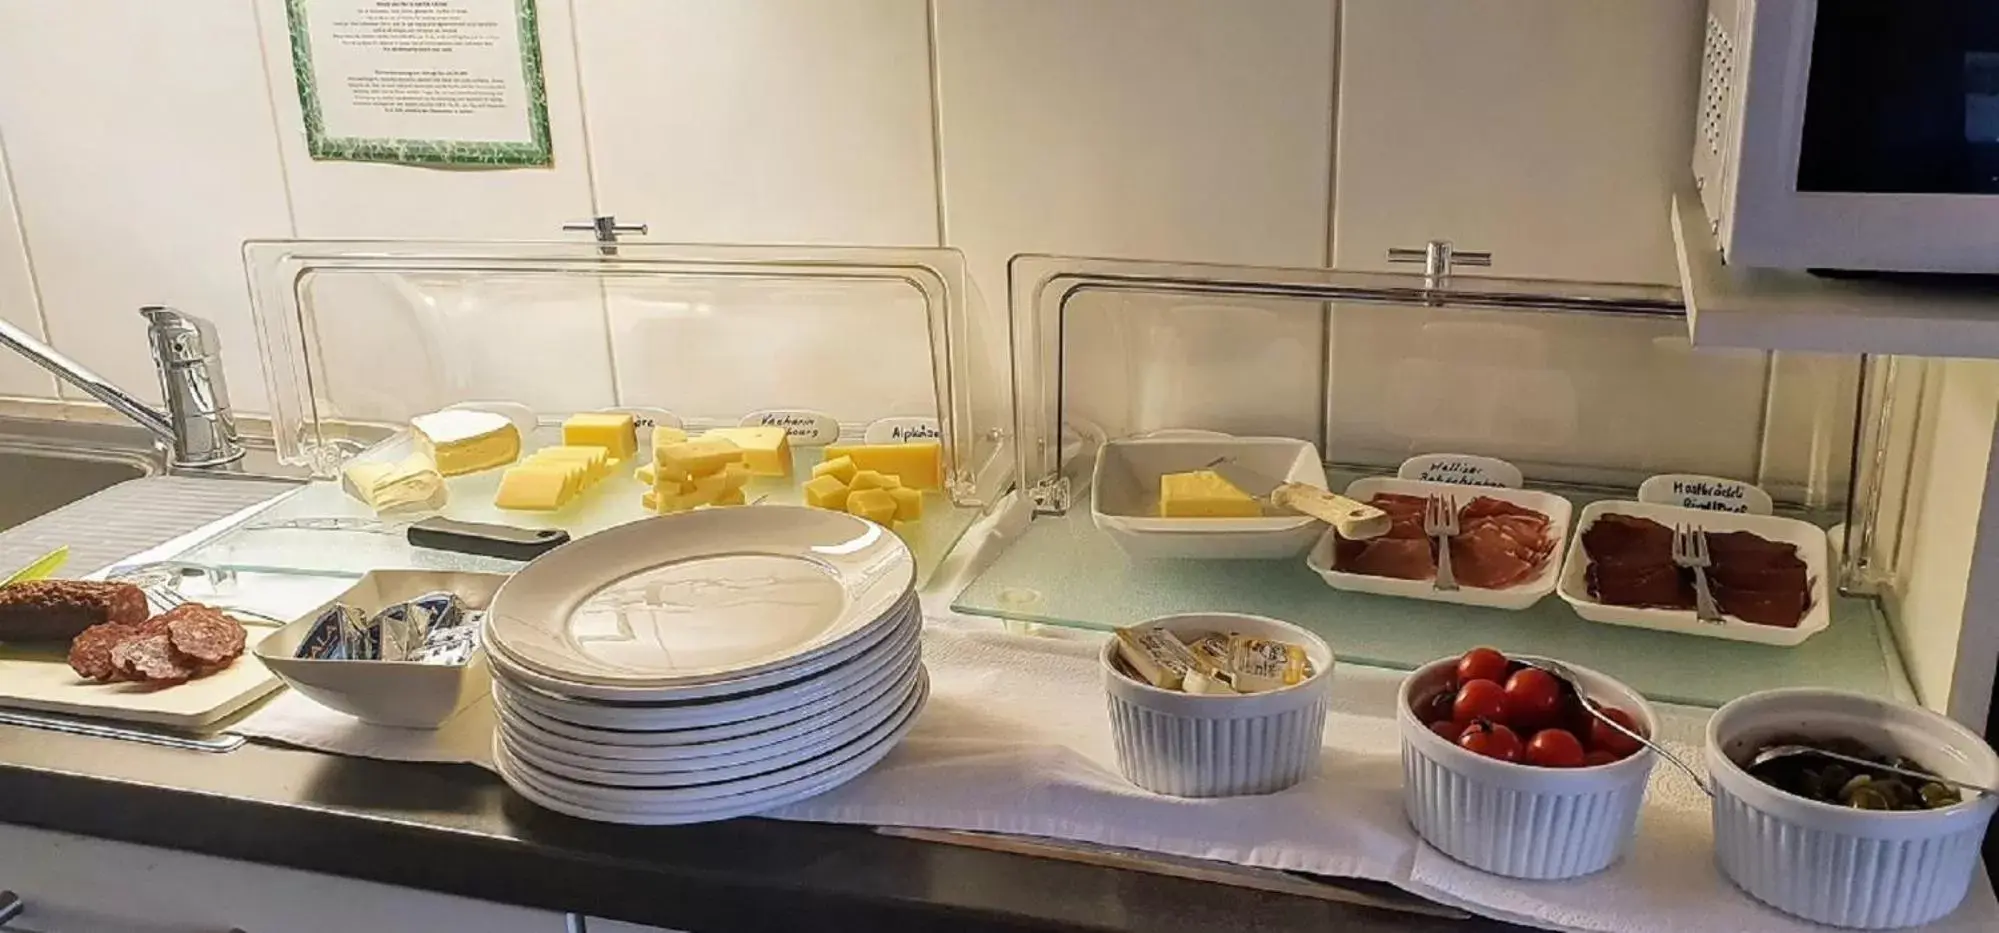 Food and drinks, Breakfast in Chalet-Gafri - BnB - Frühstückspension - Service wie im Hotel